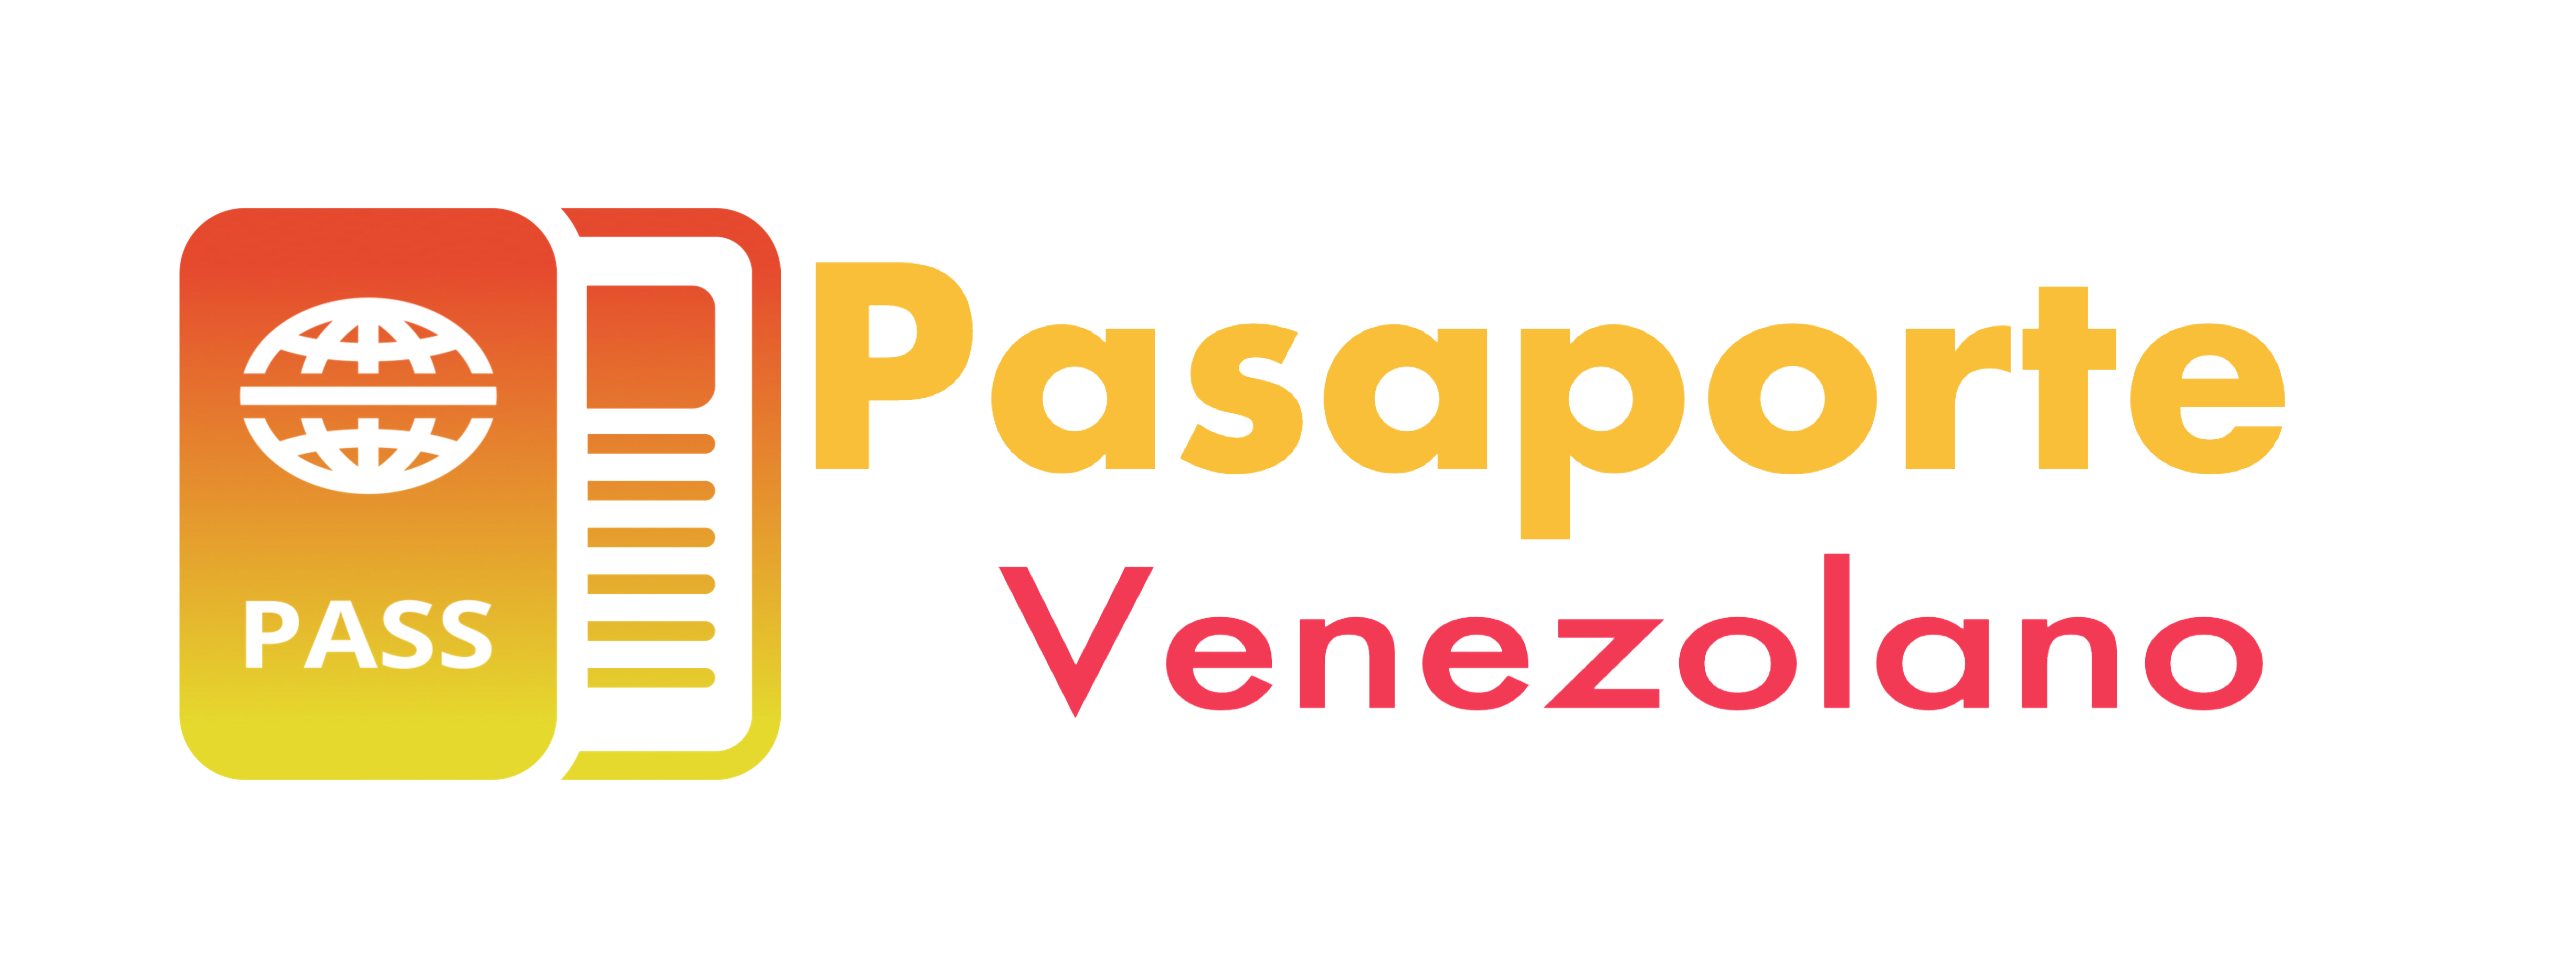 Cómo Solicitar un Pasaporte Venezolano